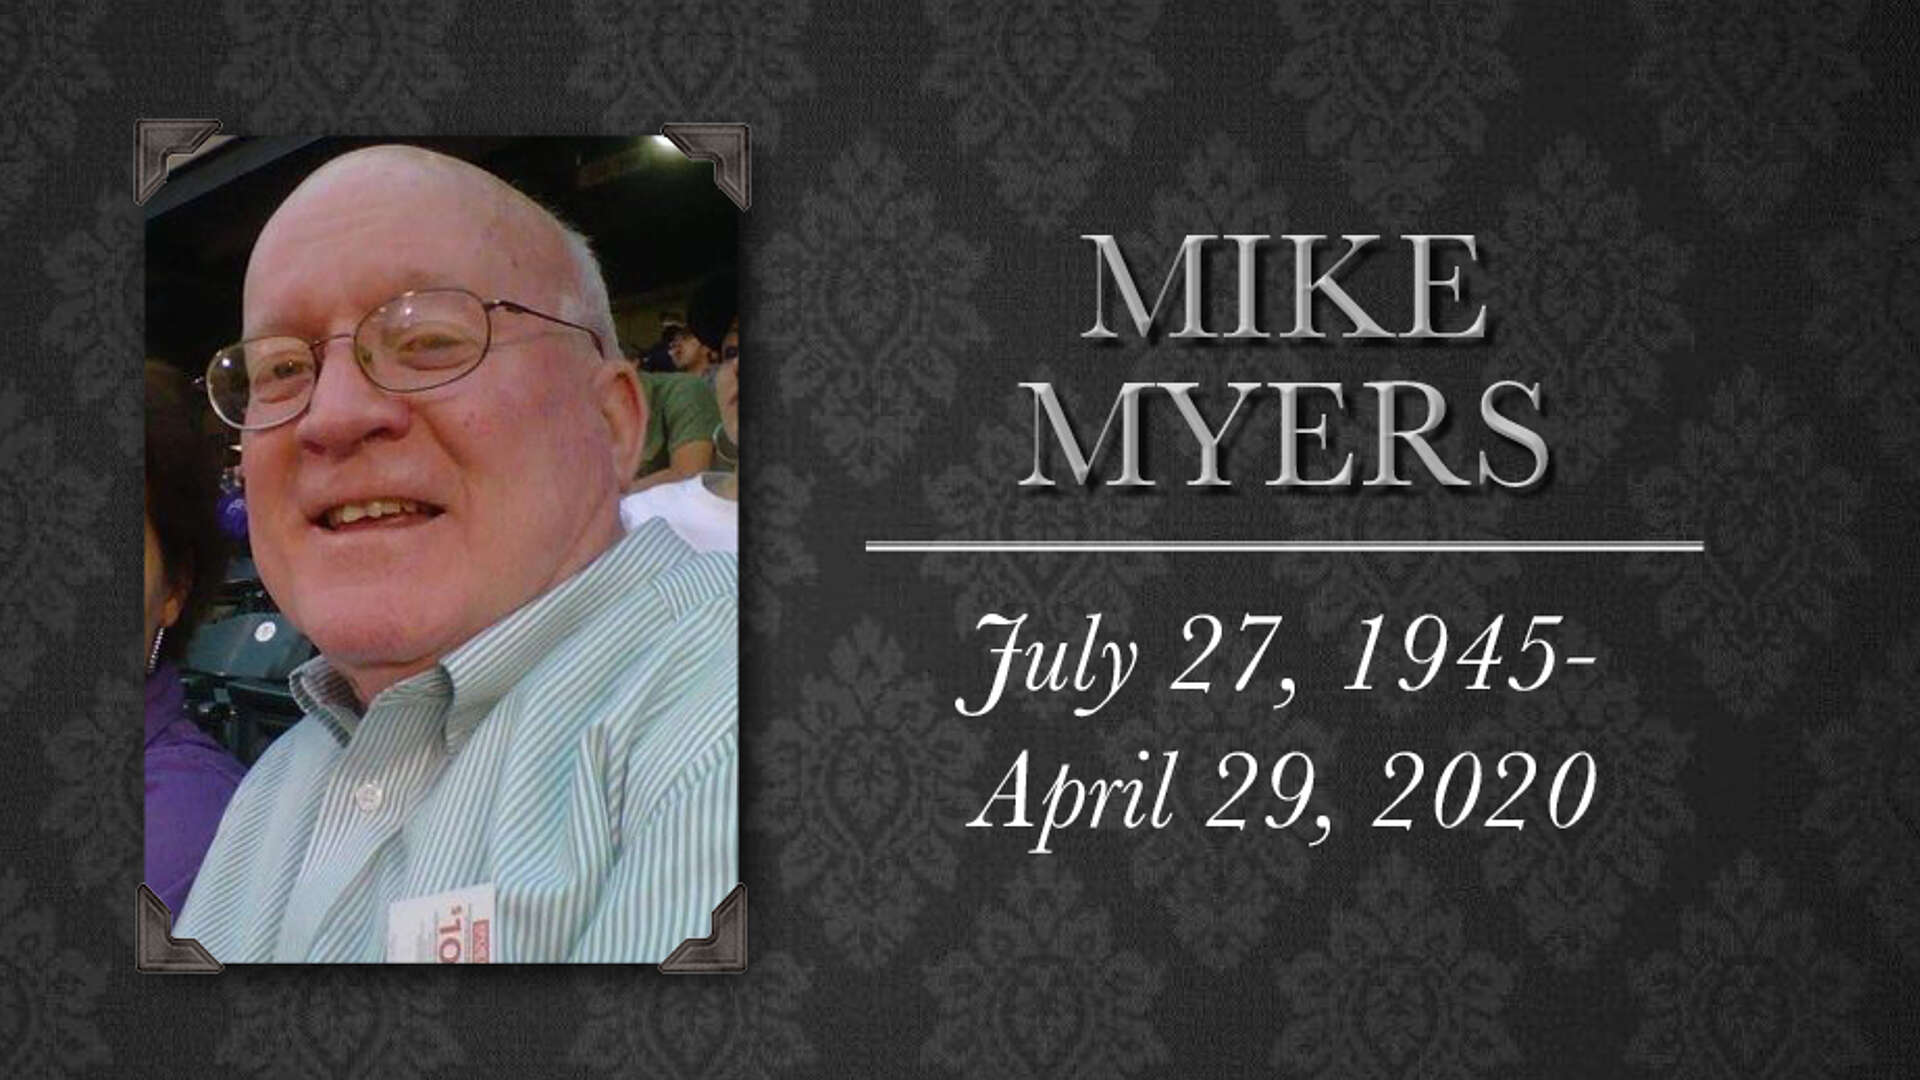 Mike Myers photo on gray damask background